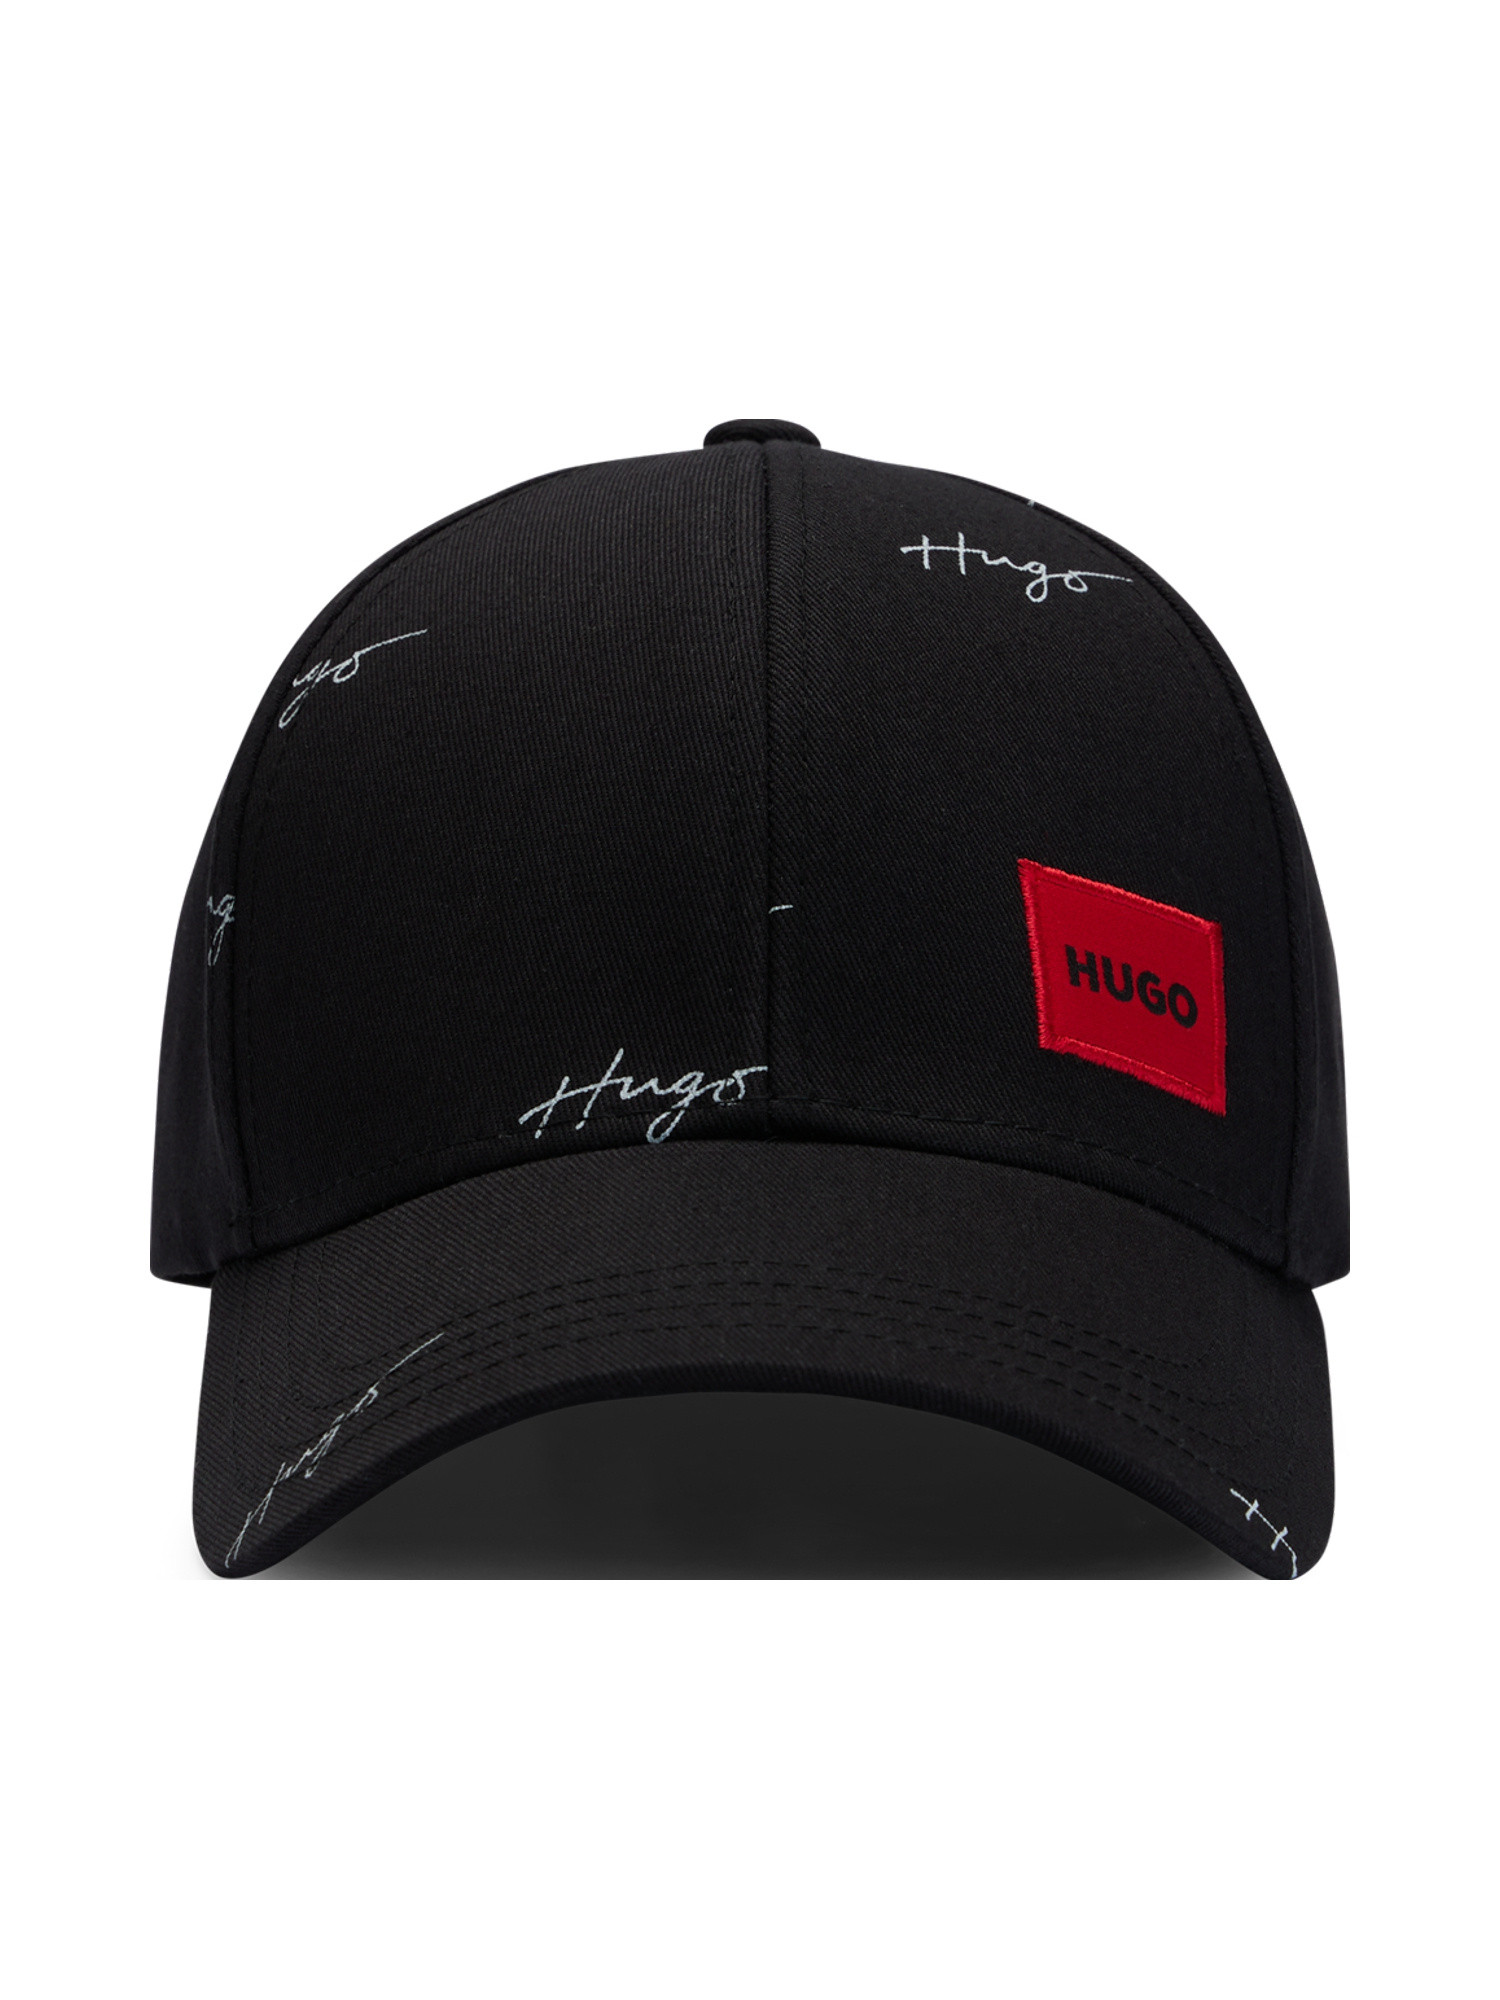 Hugo - Baseball cap with all over logo, Black, large image number 2